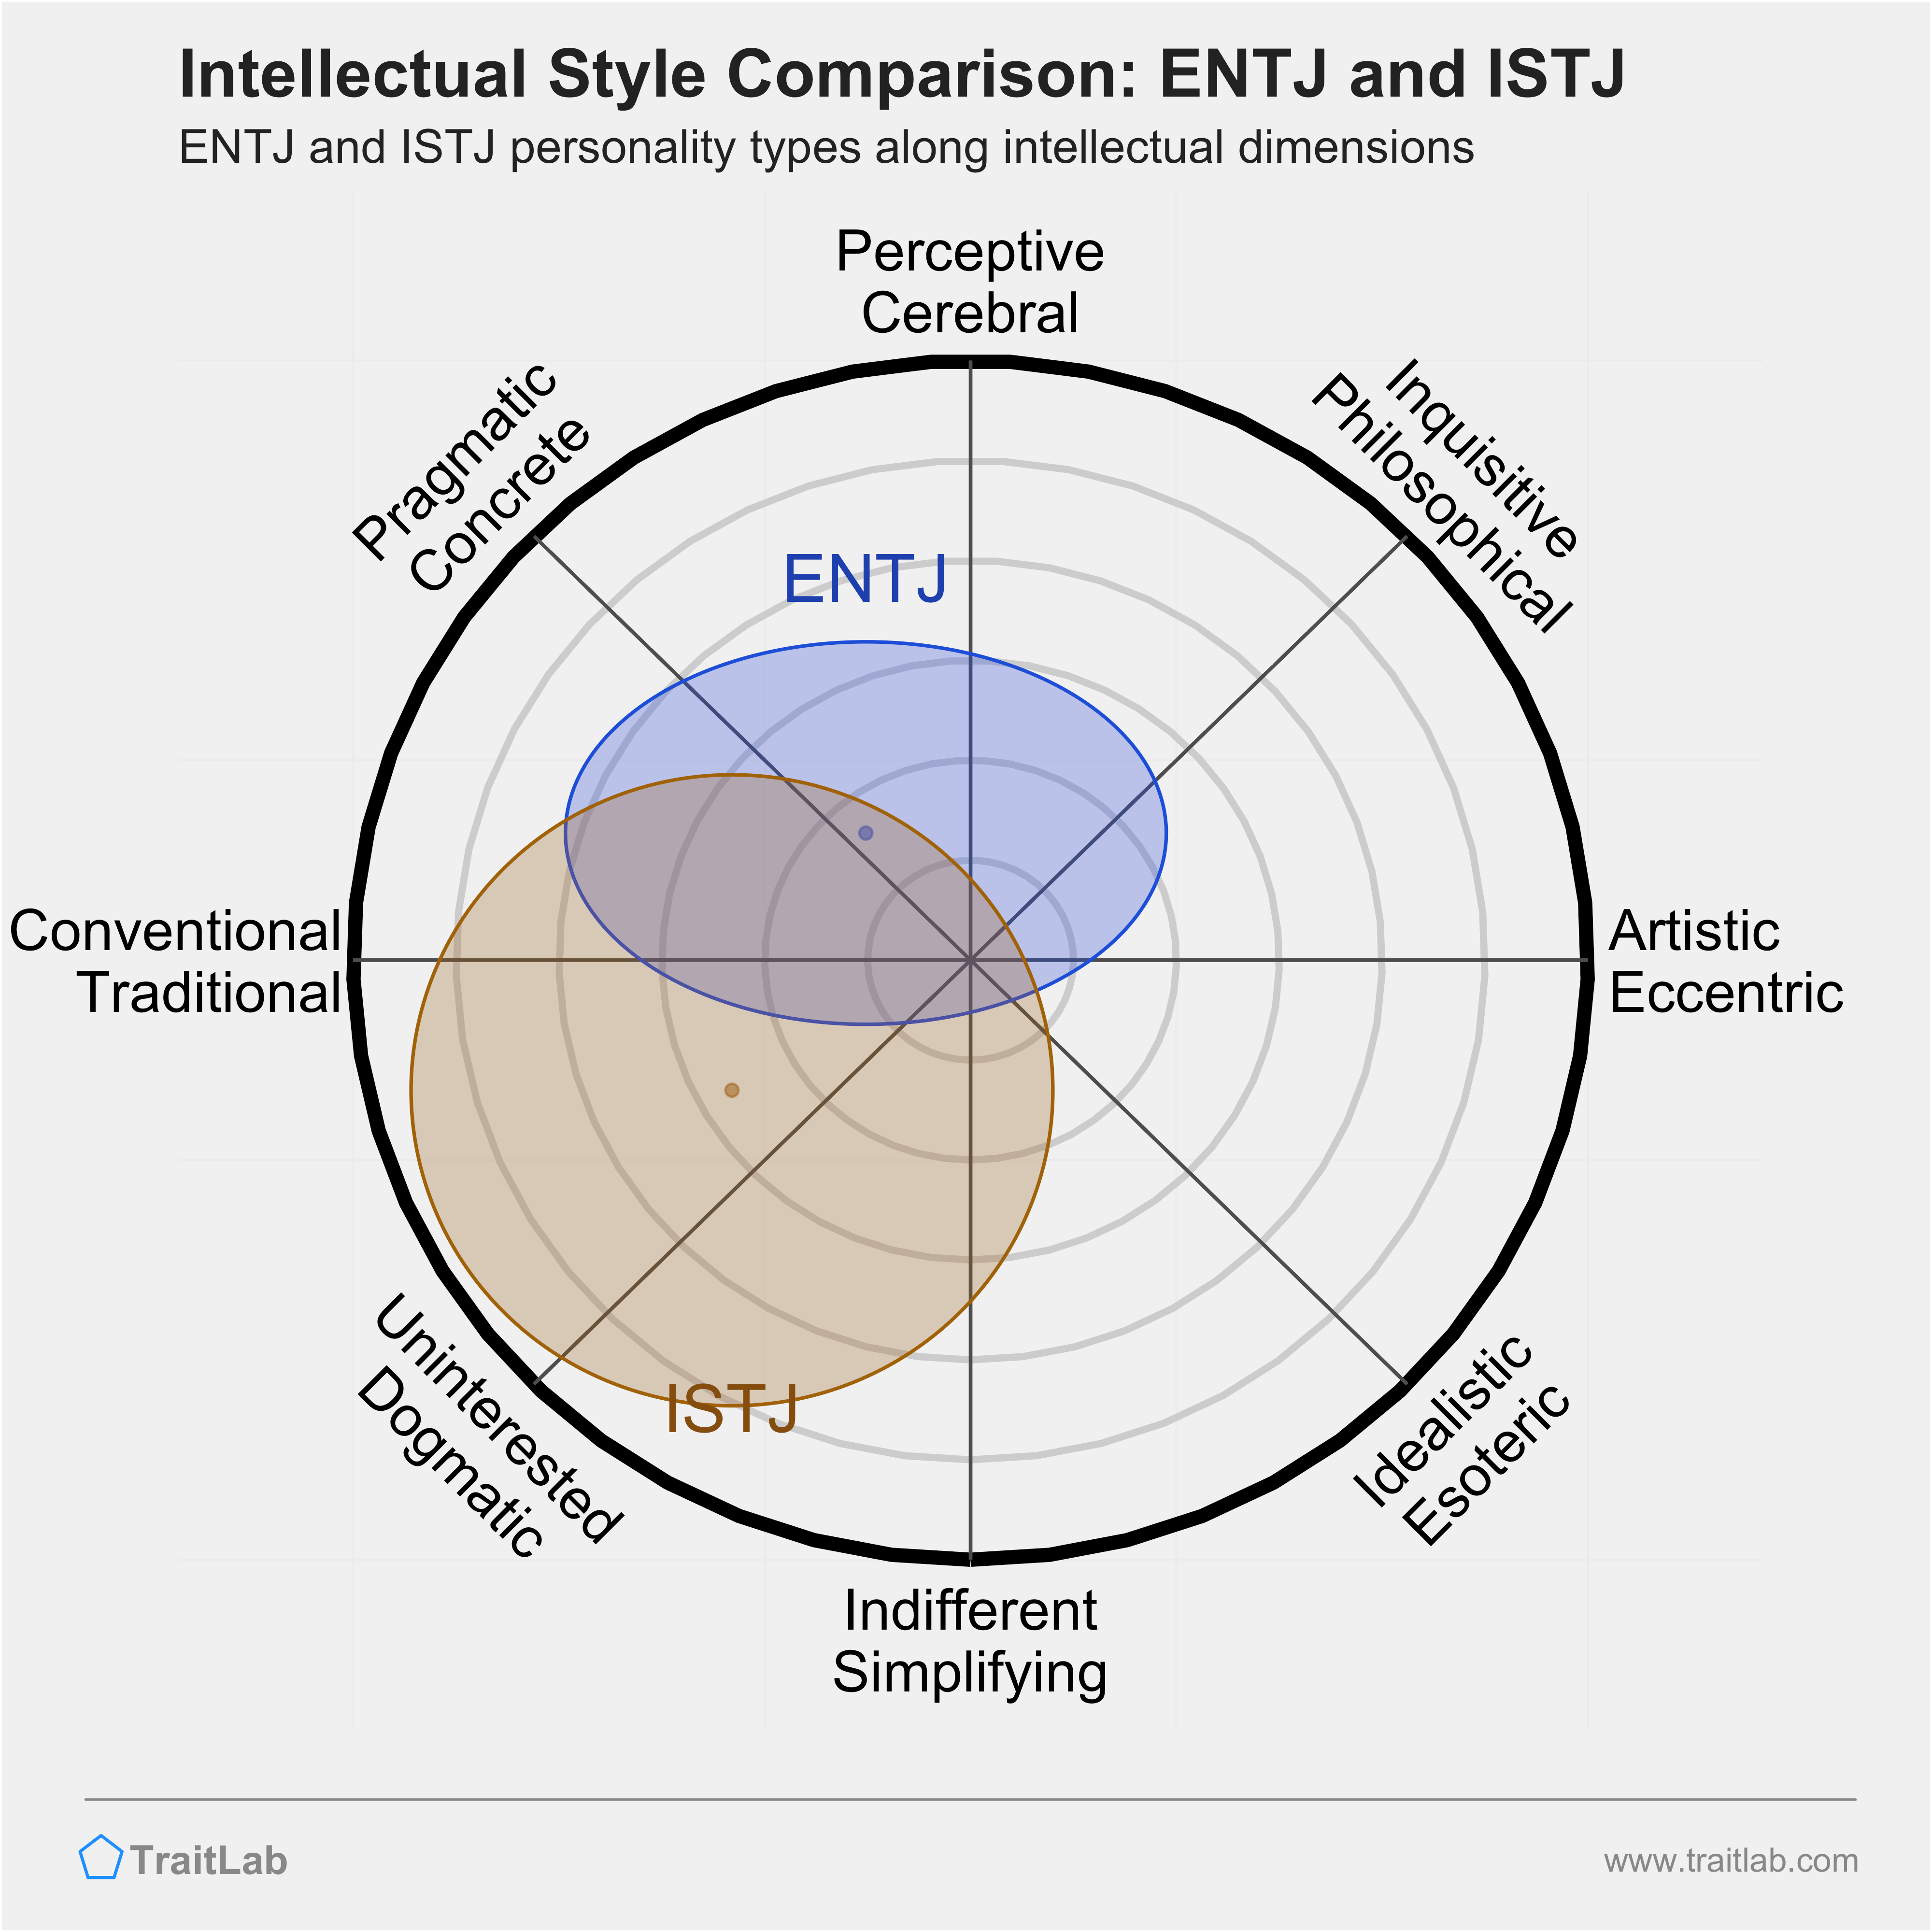 ENTJ and ISTJ comparison across intellectual dimensions